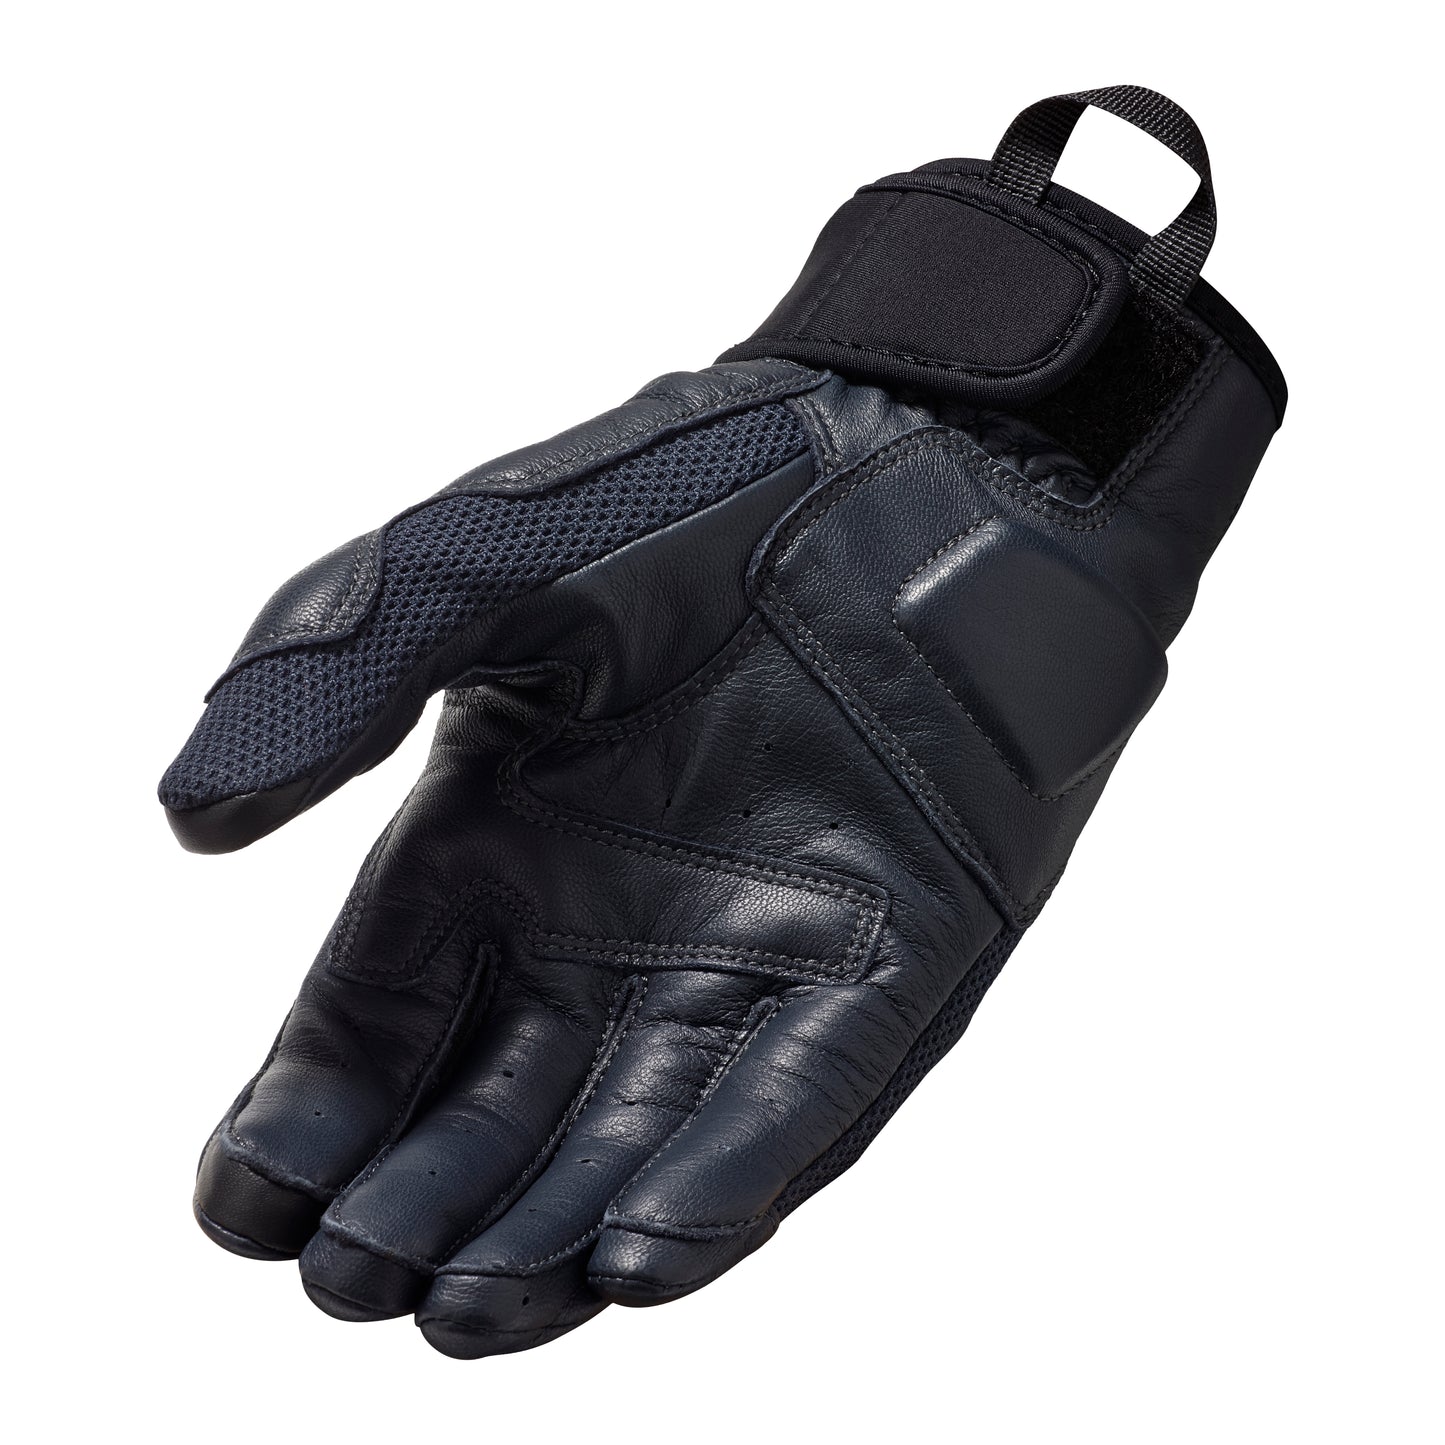 REV'IT! Caliber Gloves